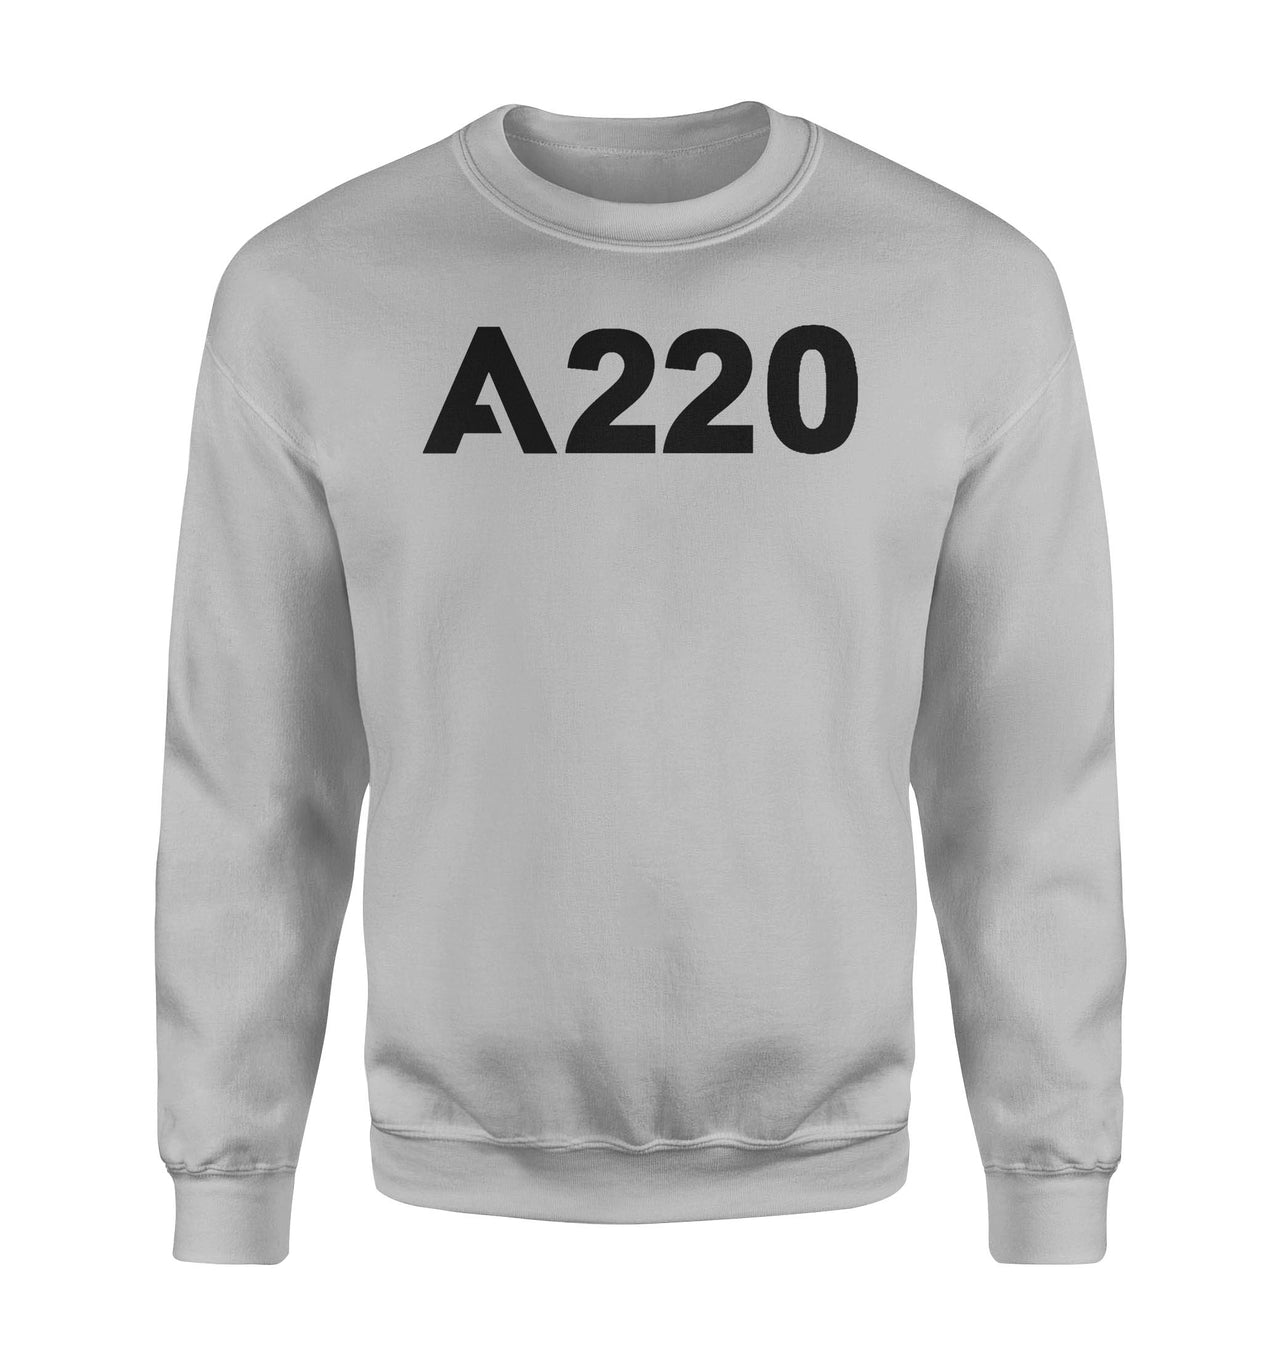 A220 Flat Text Designed Sweatshirts